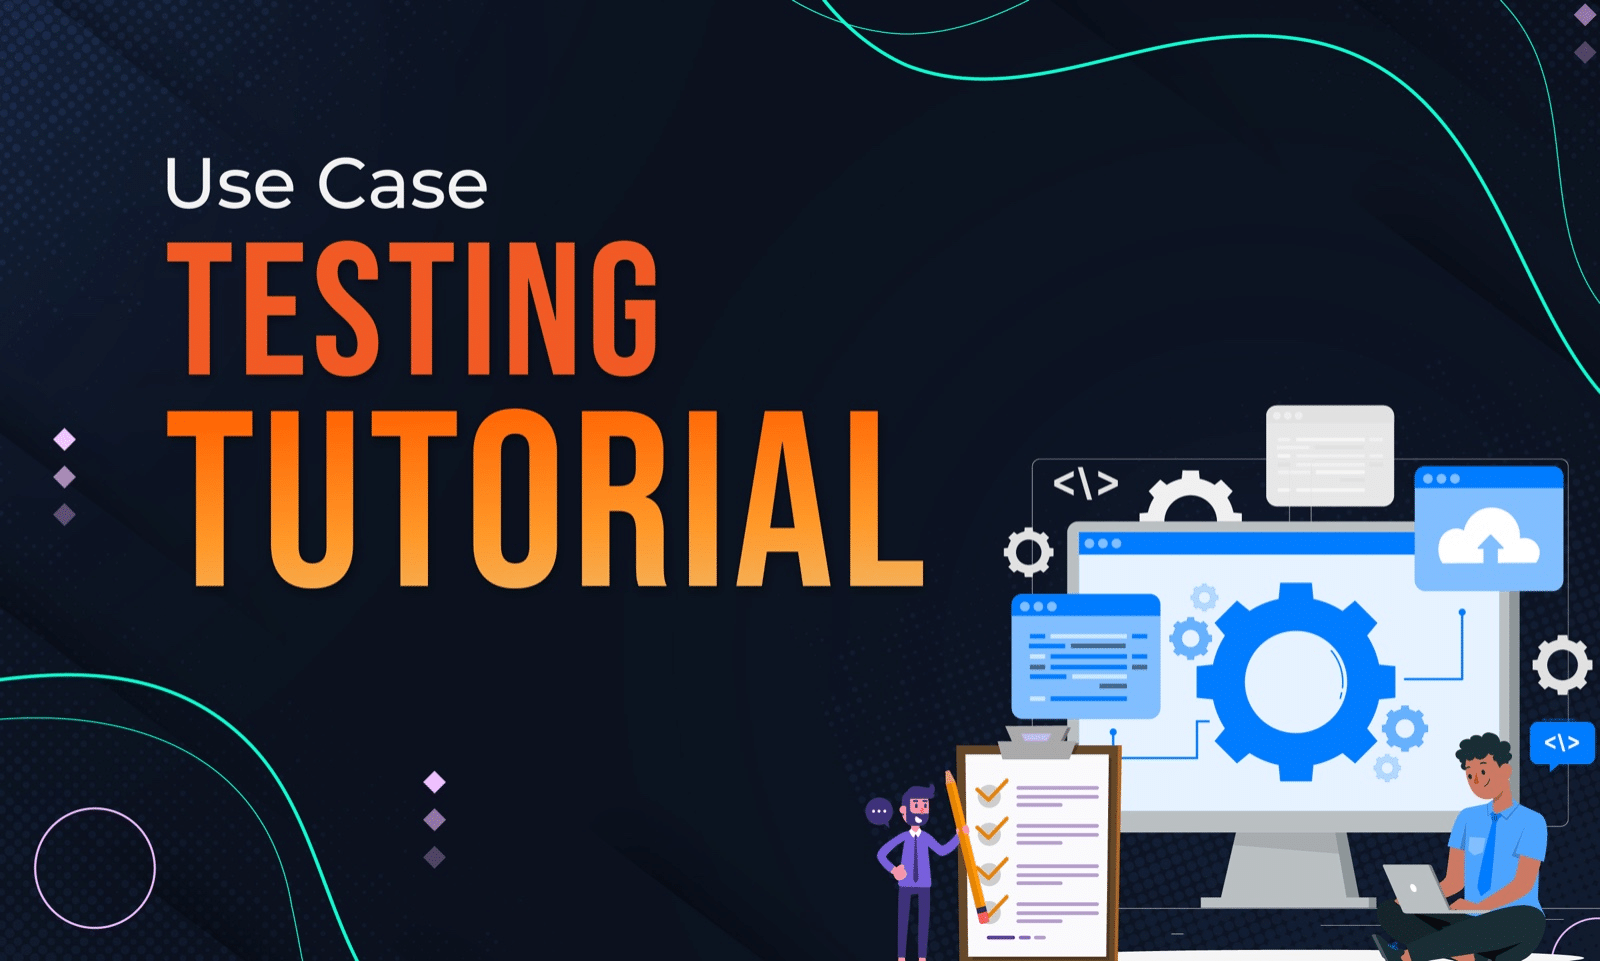 Use Case Testing